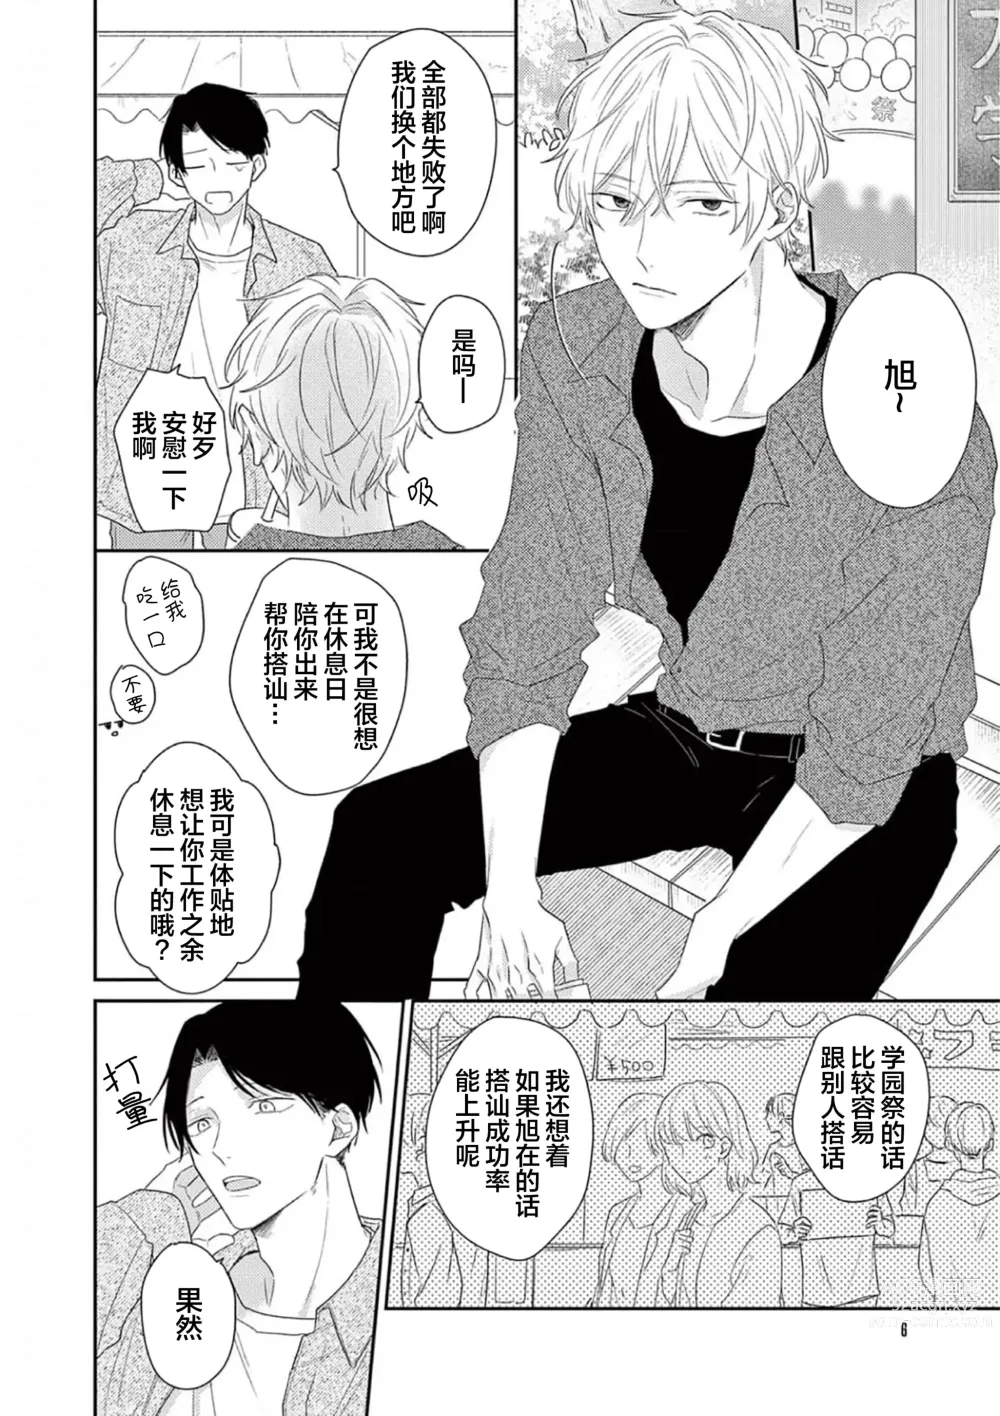 Page 8 of manga 直到这曲恋歌结束为止